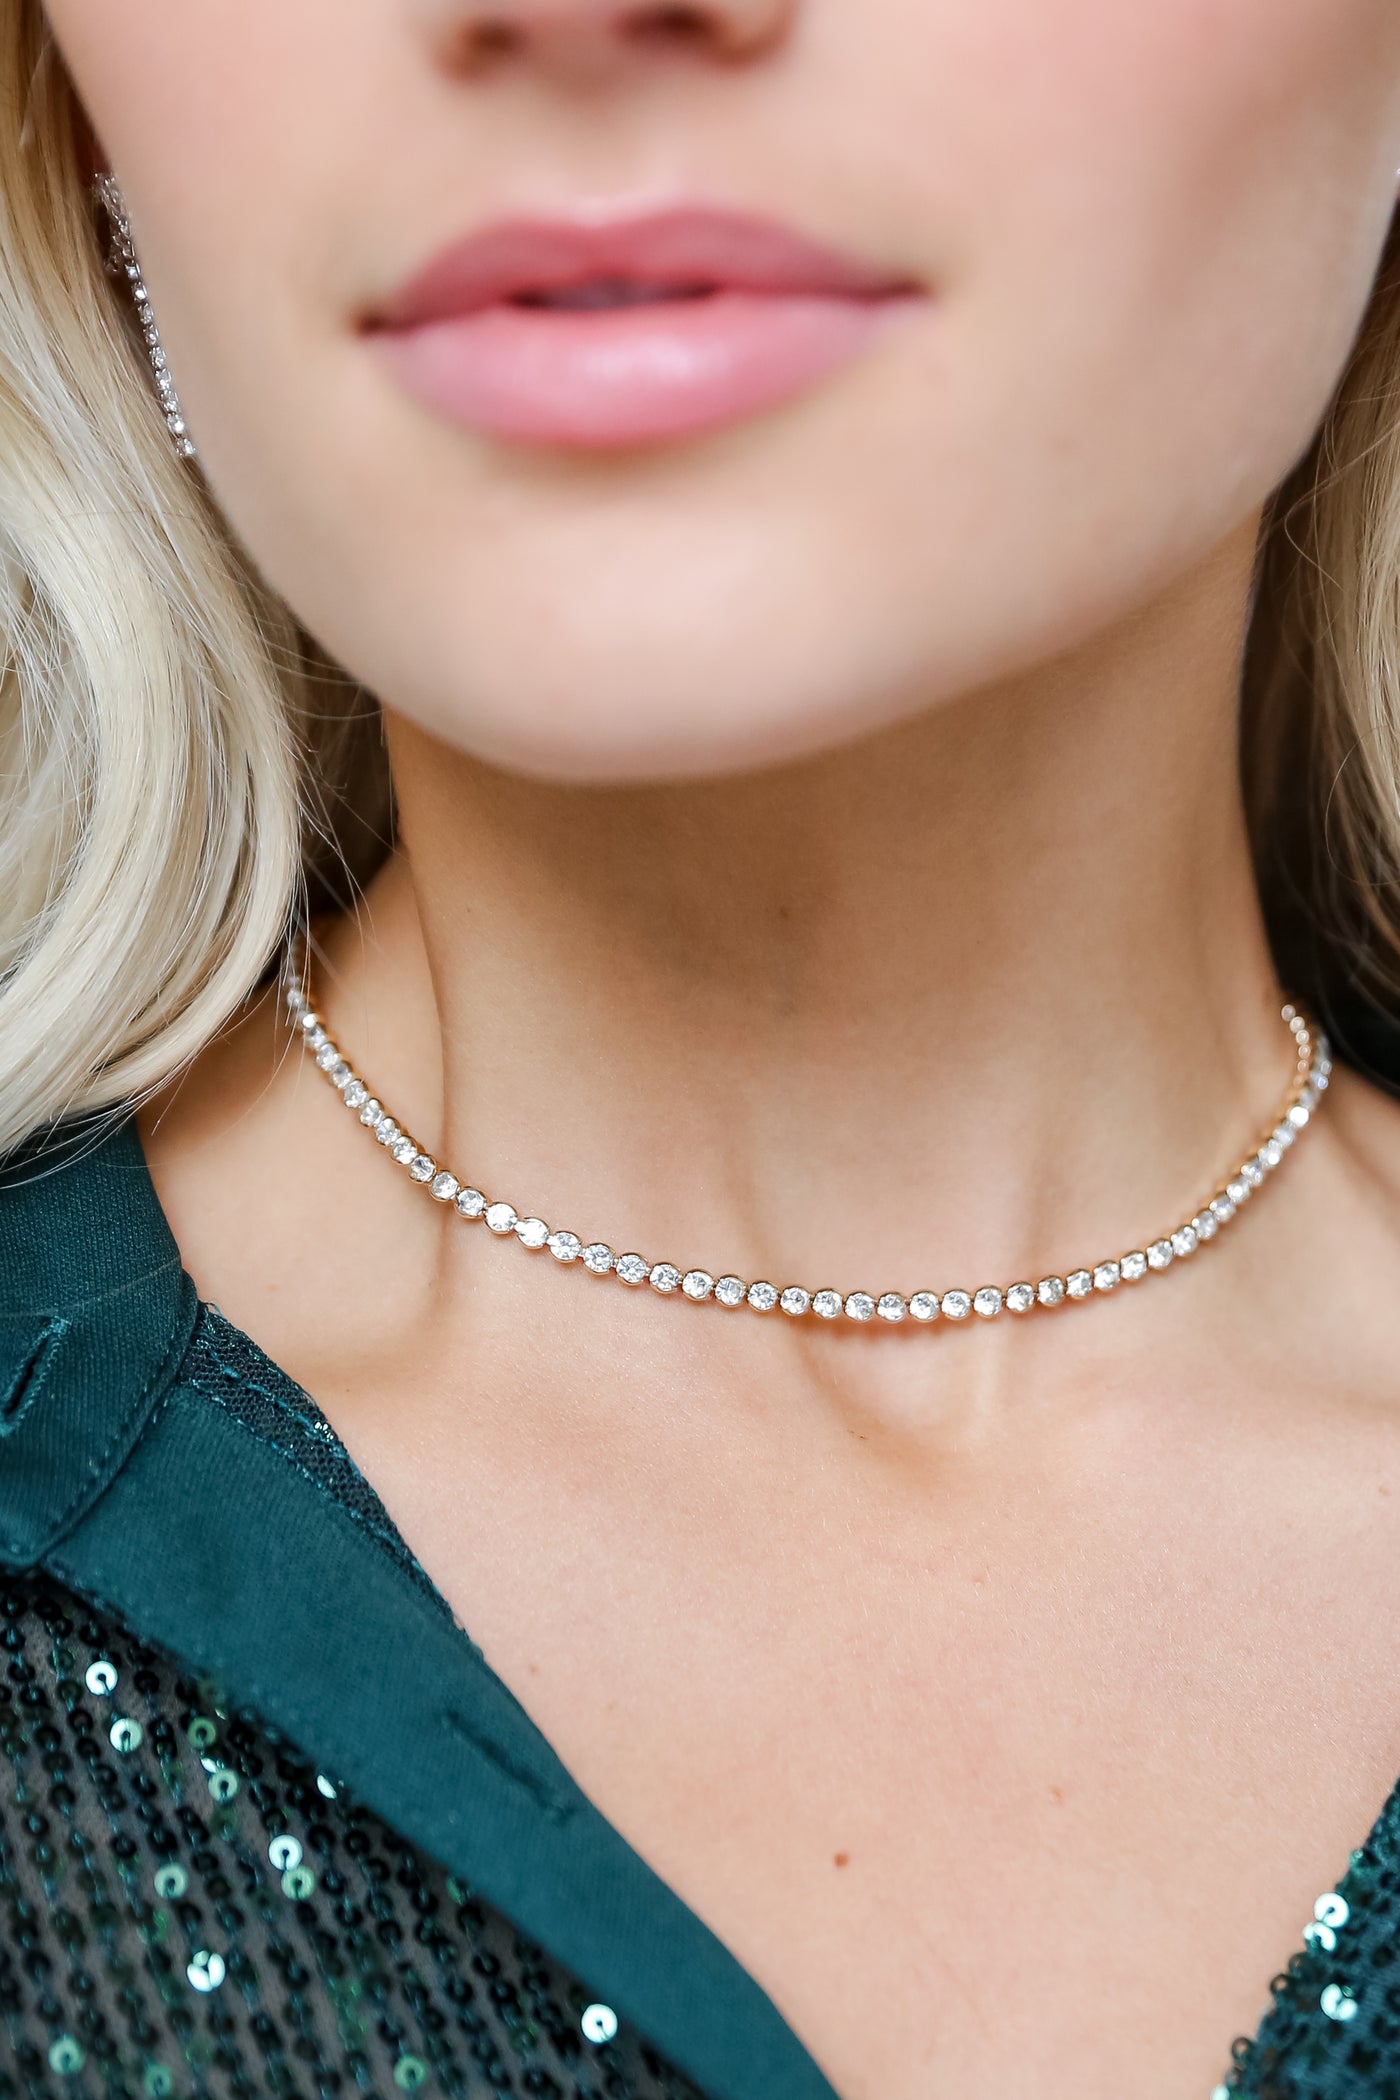 sparkly necklaces